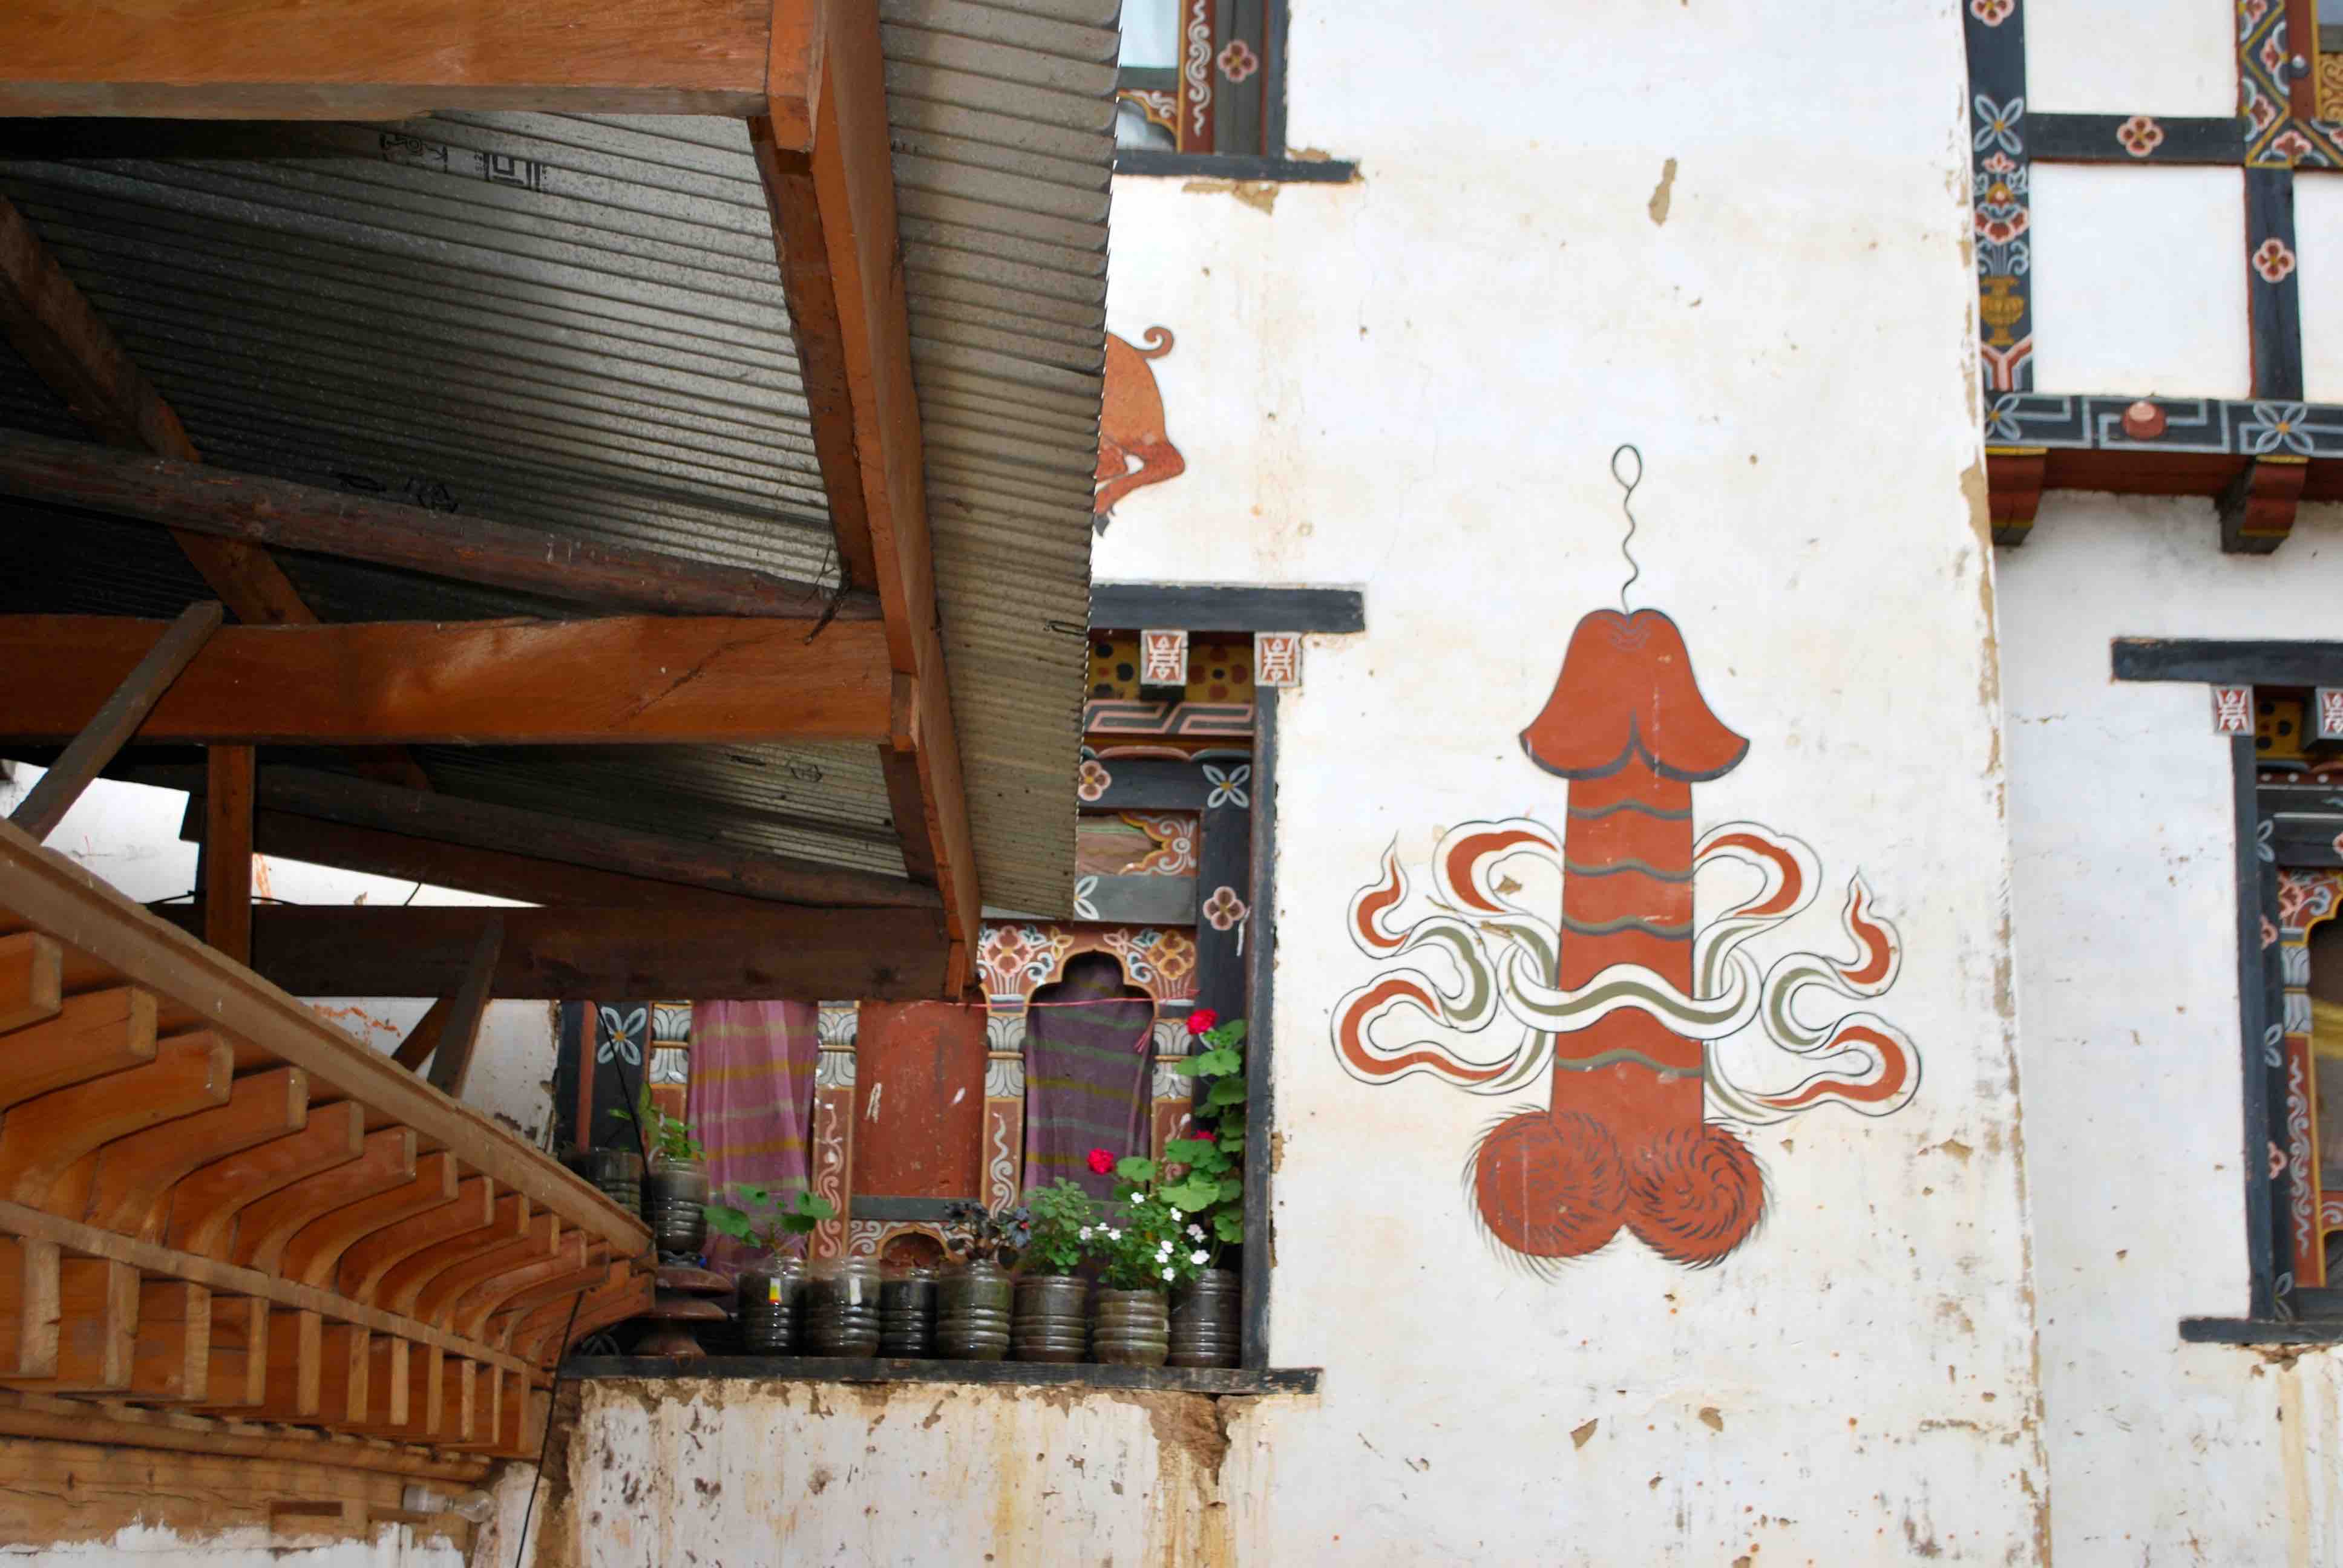 giant phallic symbol Bhutan - AspirantSG